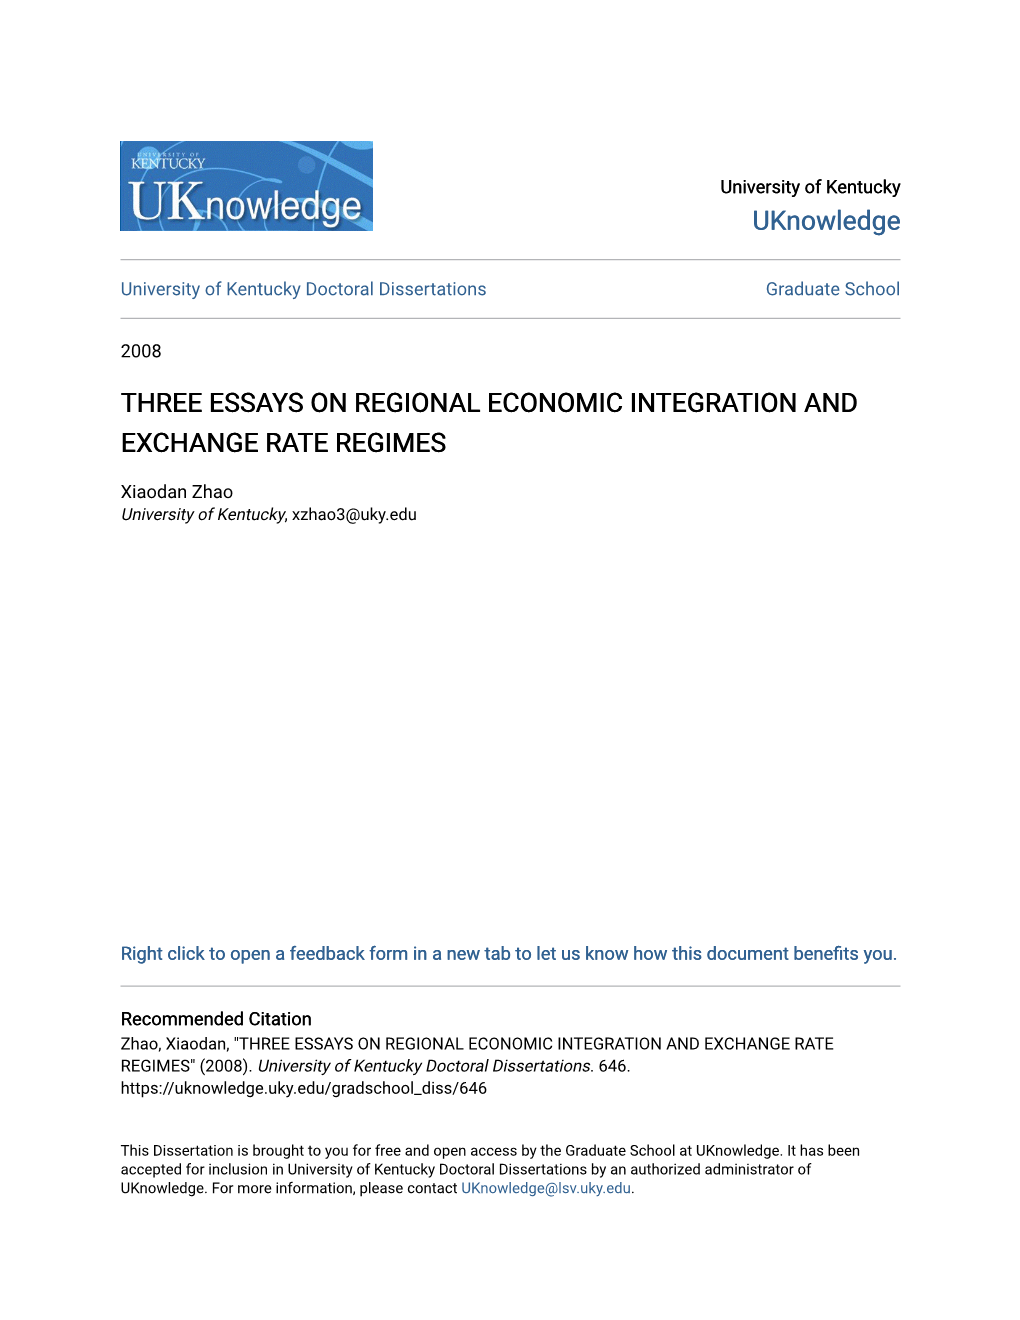 Three Essays on Regional Economic Integration and Exchange Rate Regimes